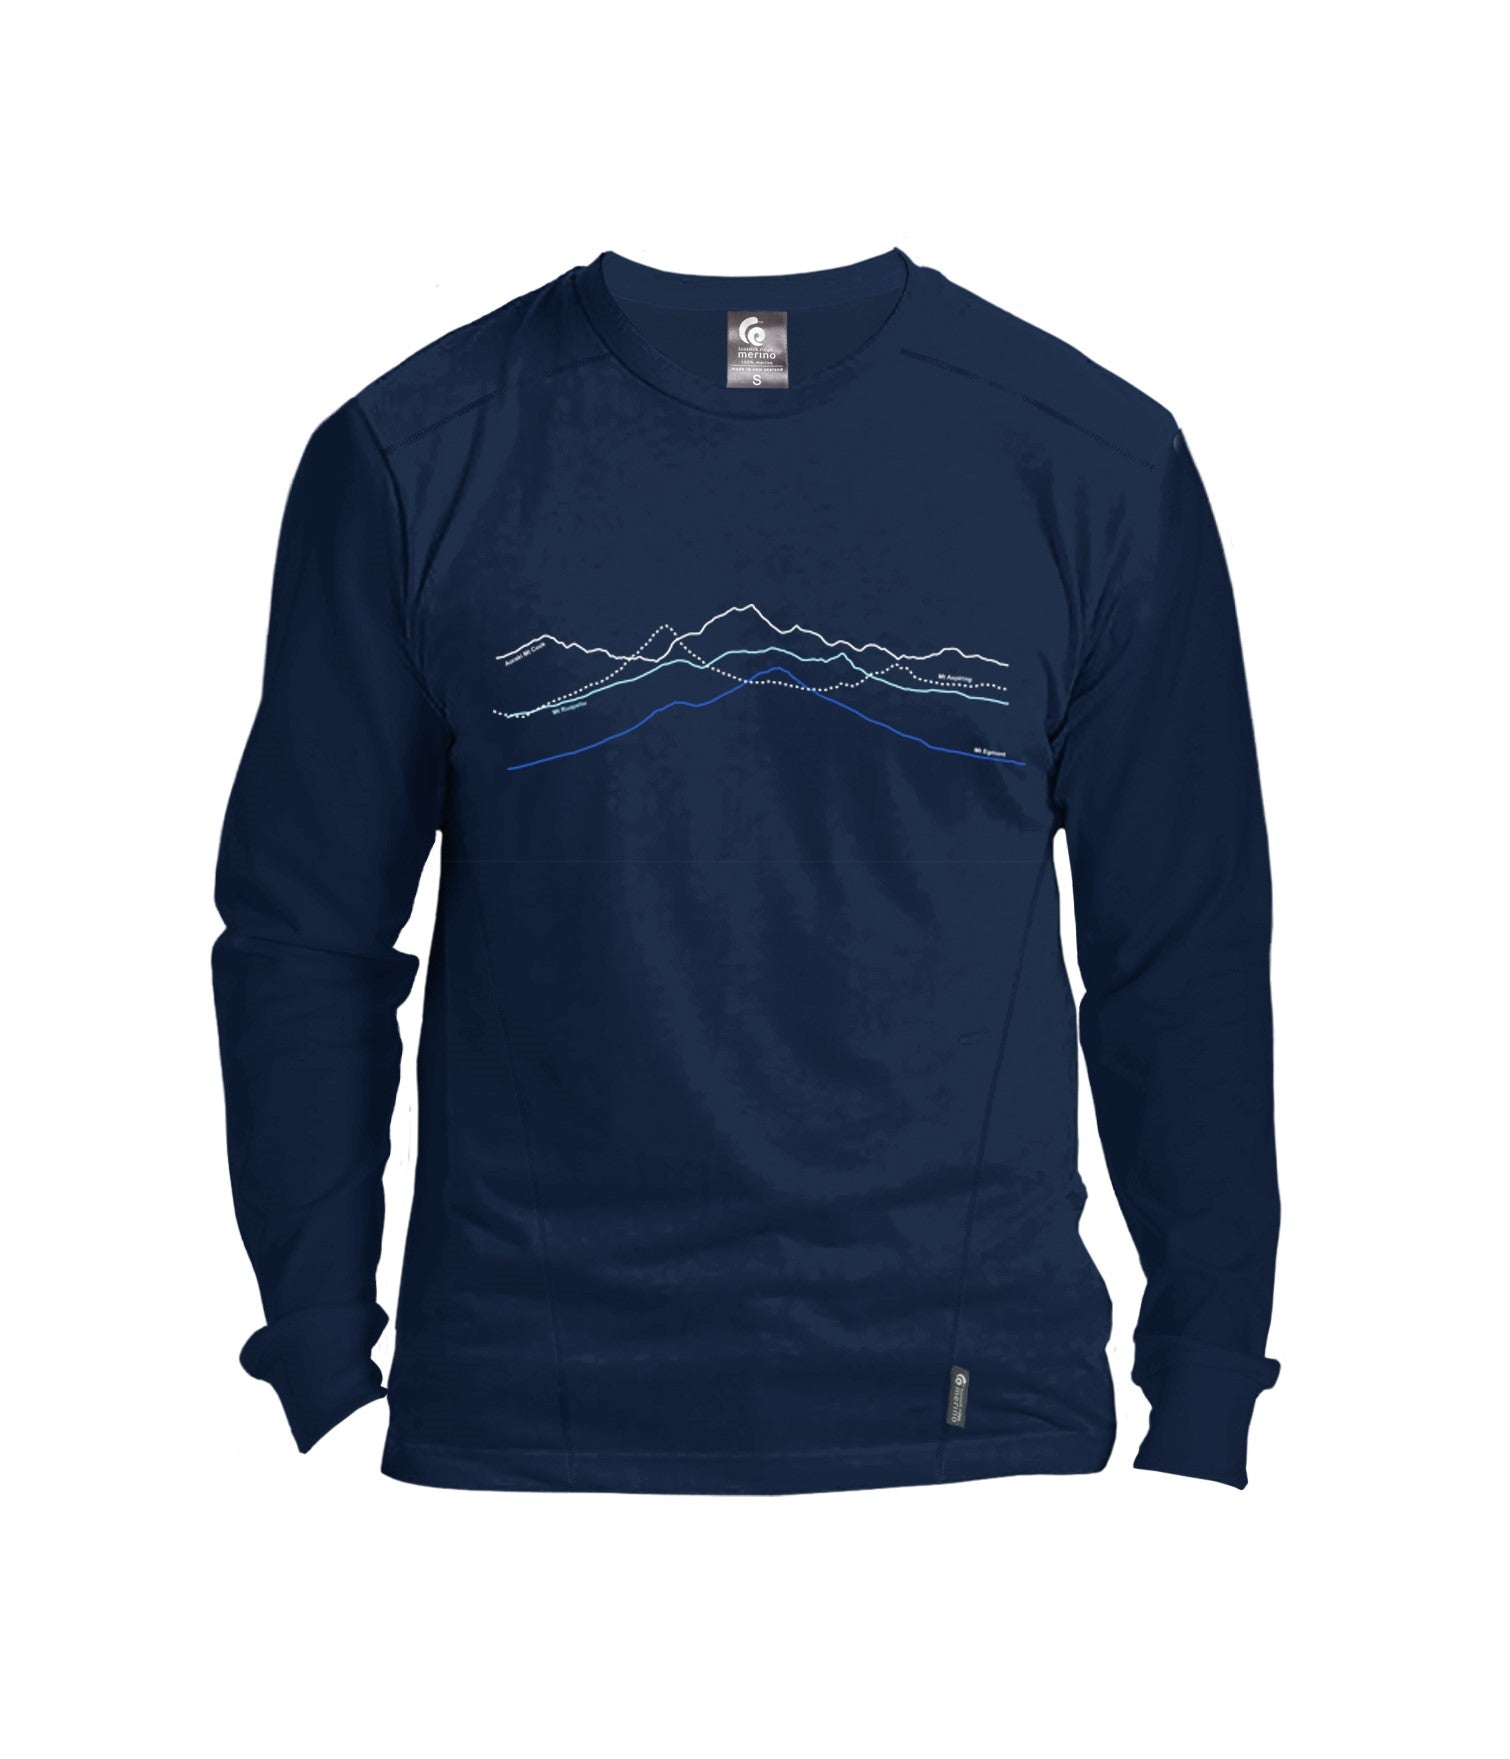 Merino Men's Long Sleeved Mountain Peaks Tee. Made in New Zealand.